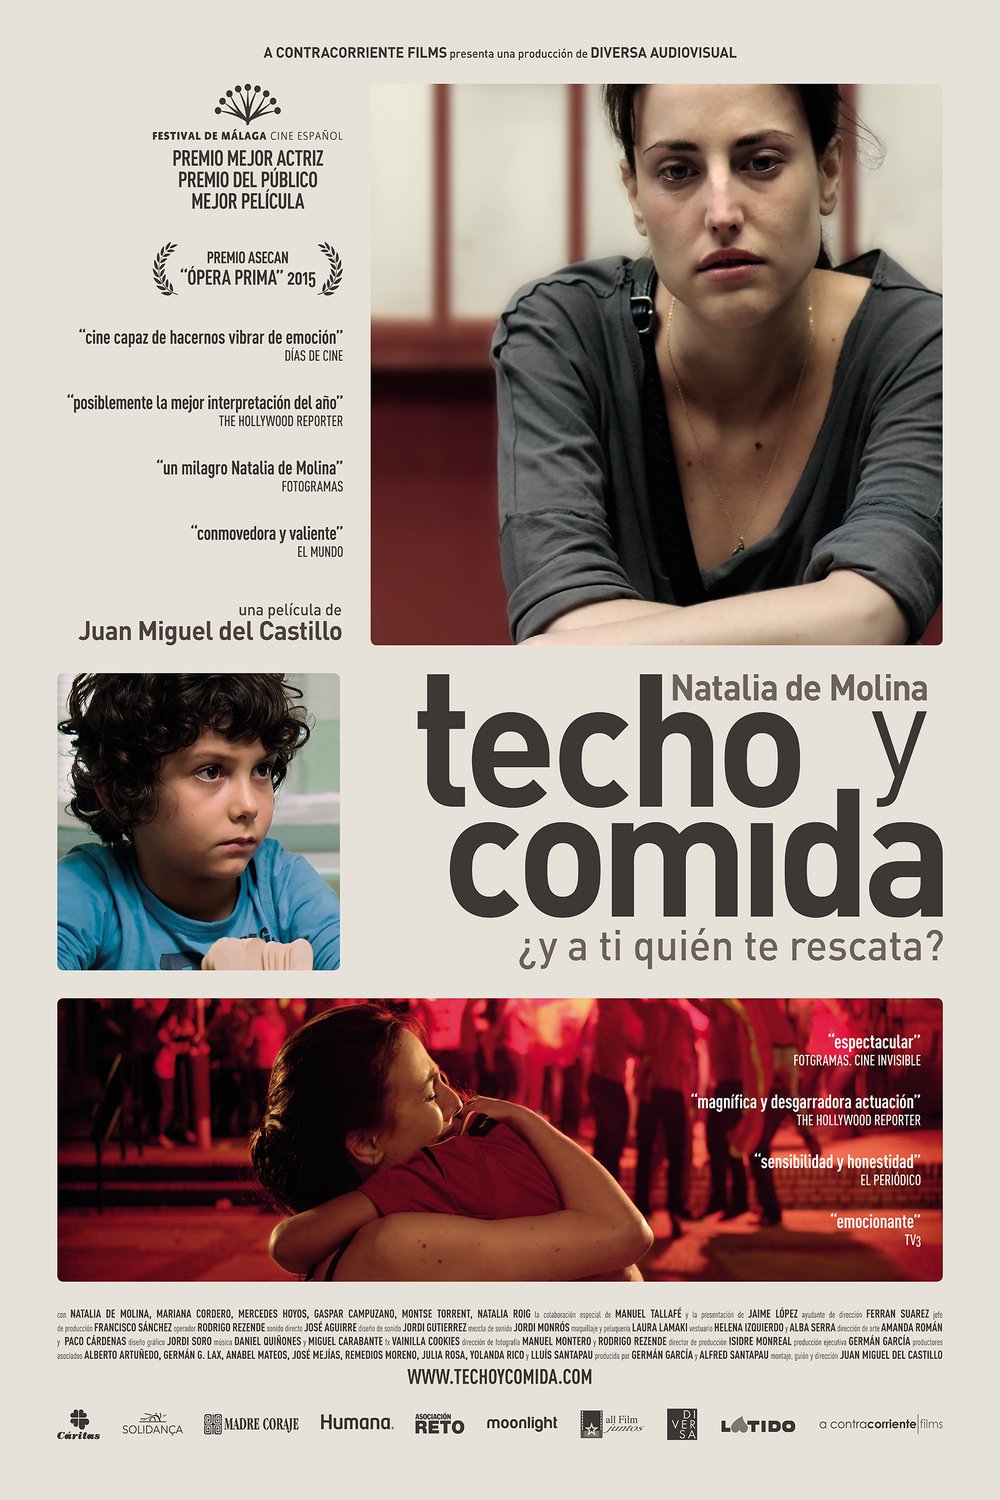 Spanish poster of the movie Techo y comida